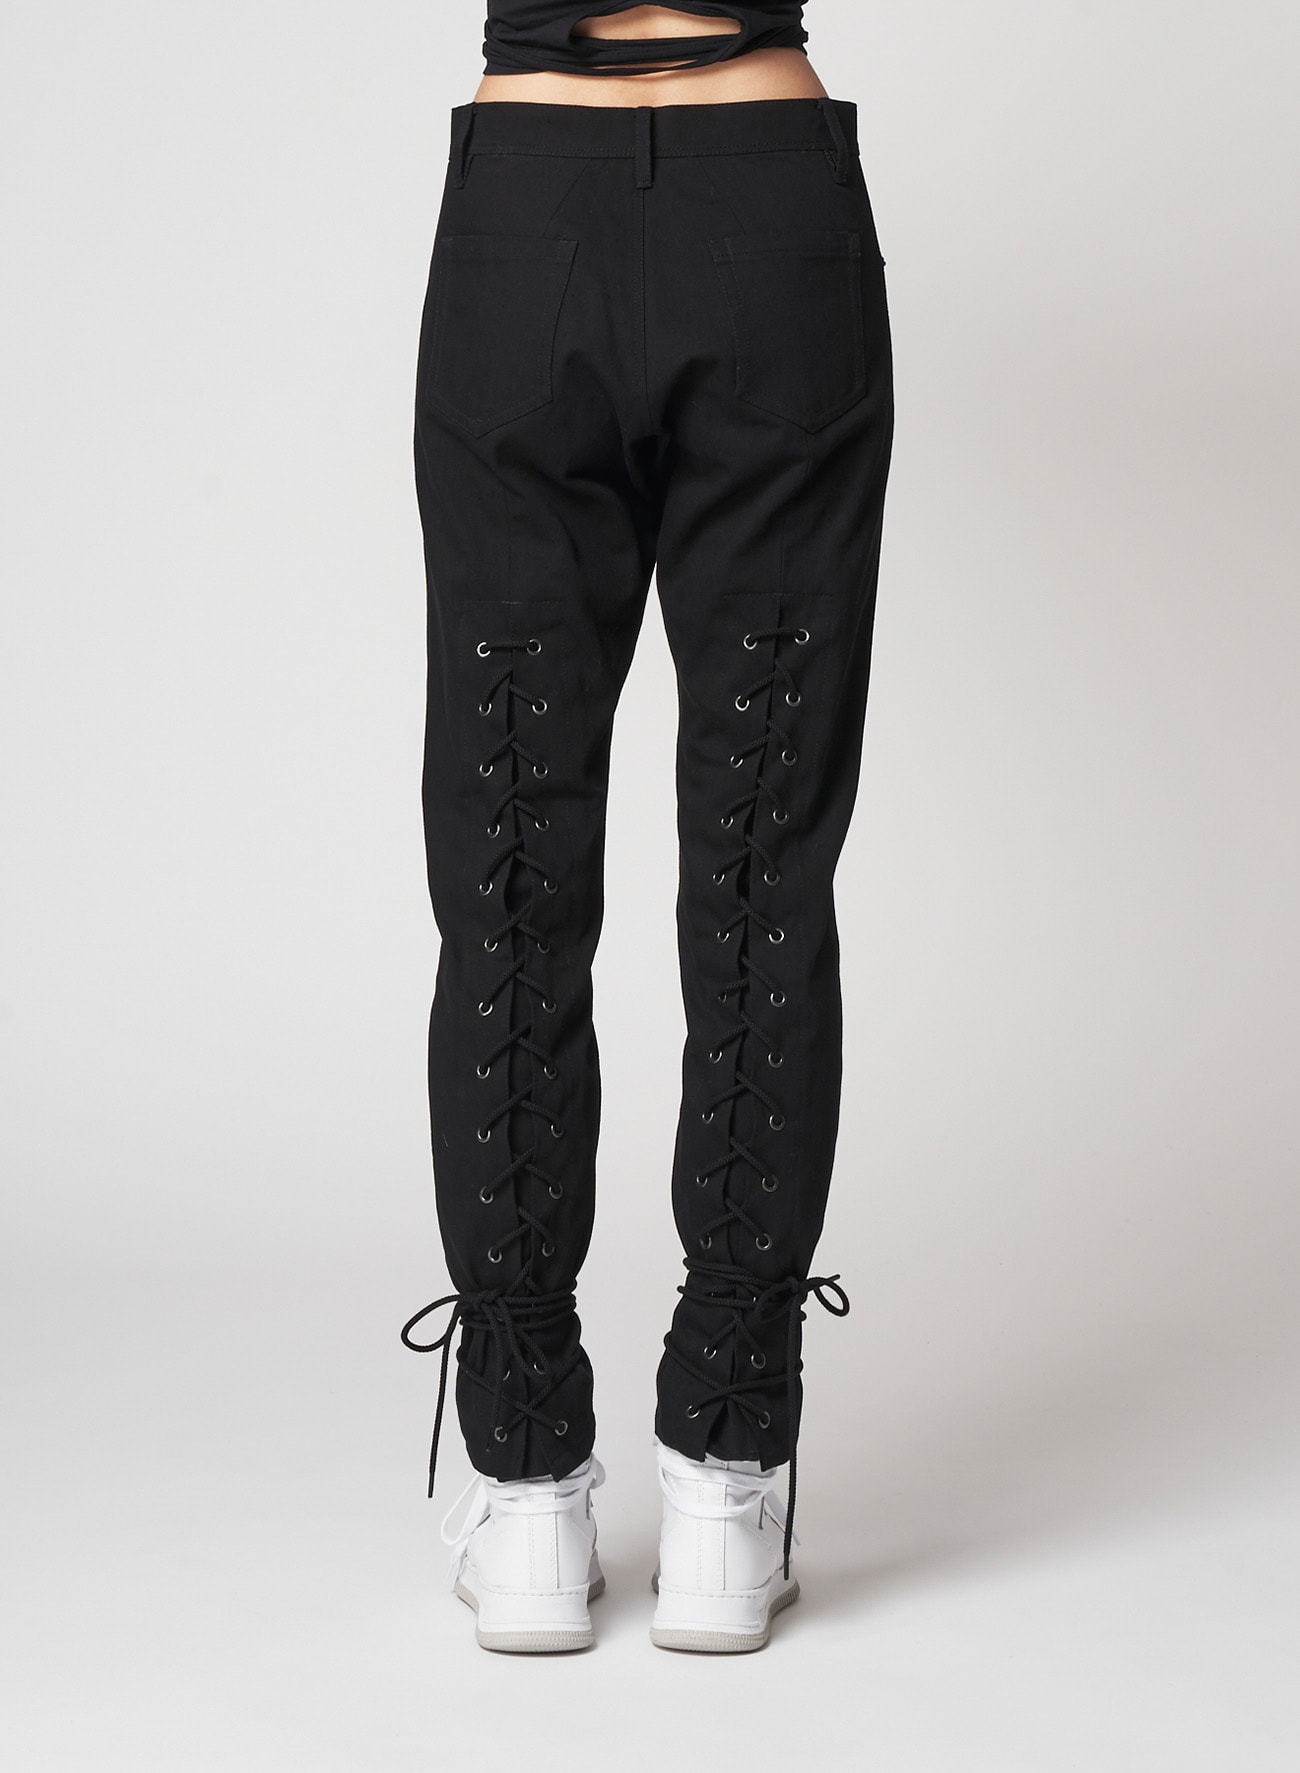 Black Denim Back Lace Up Pants(S Black): Vintage 1.1｜THE SHOP 